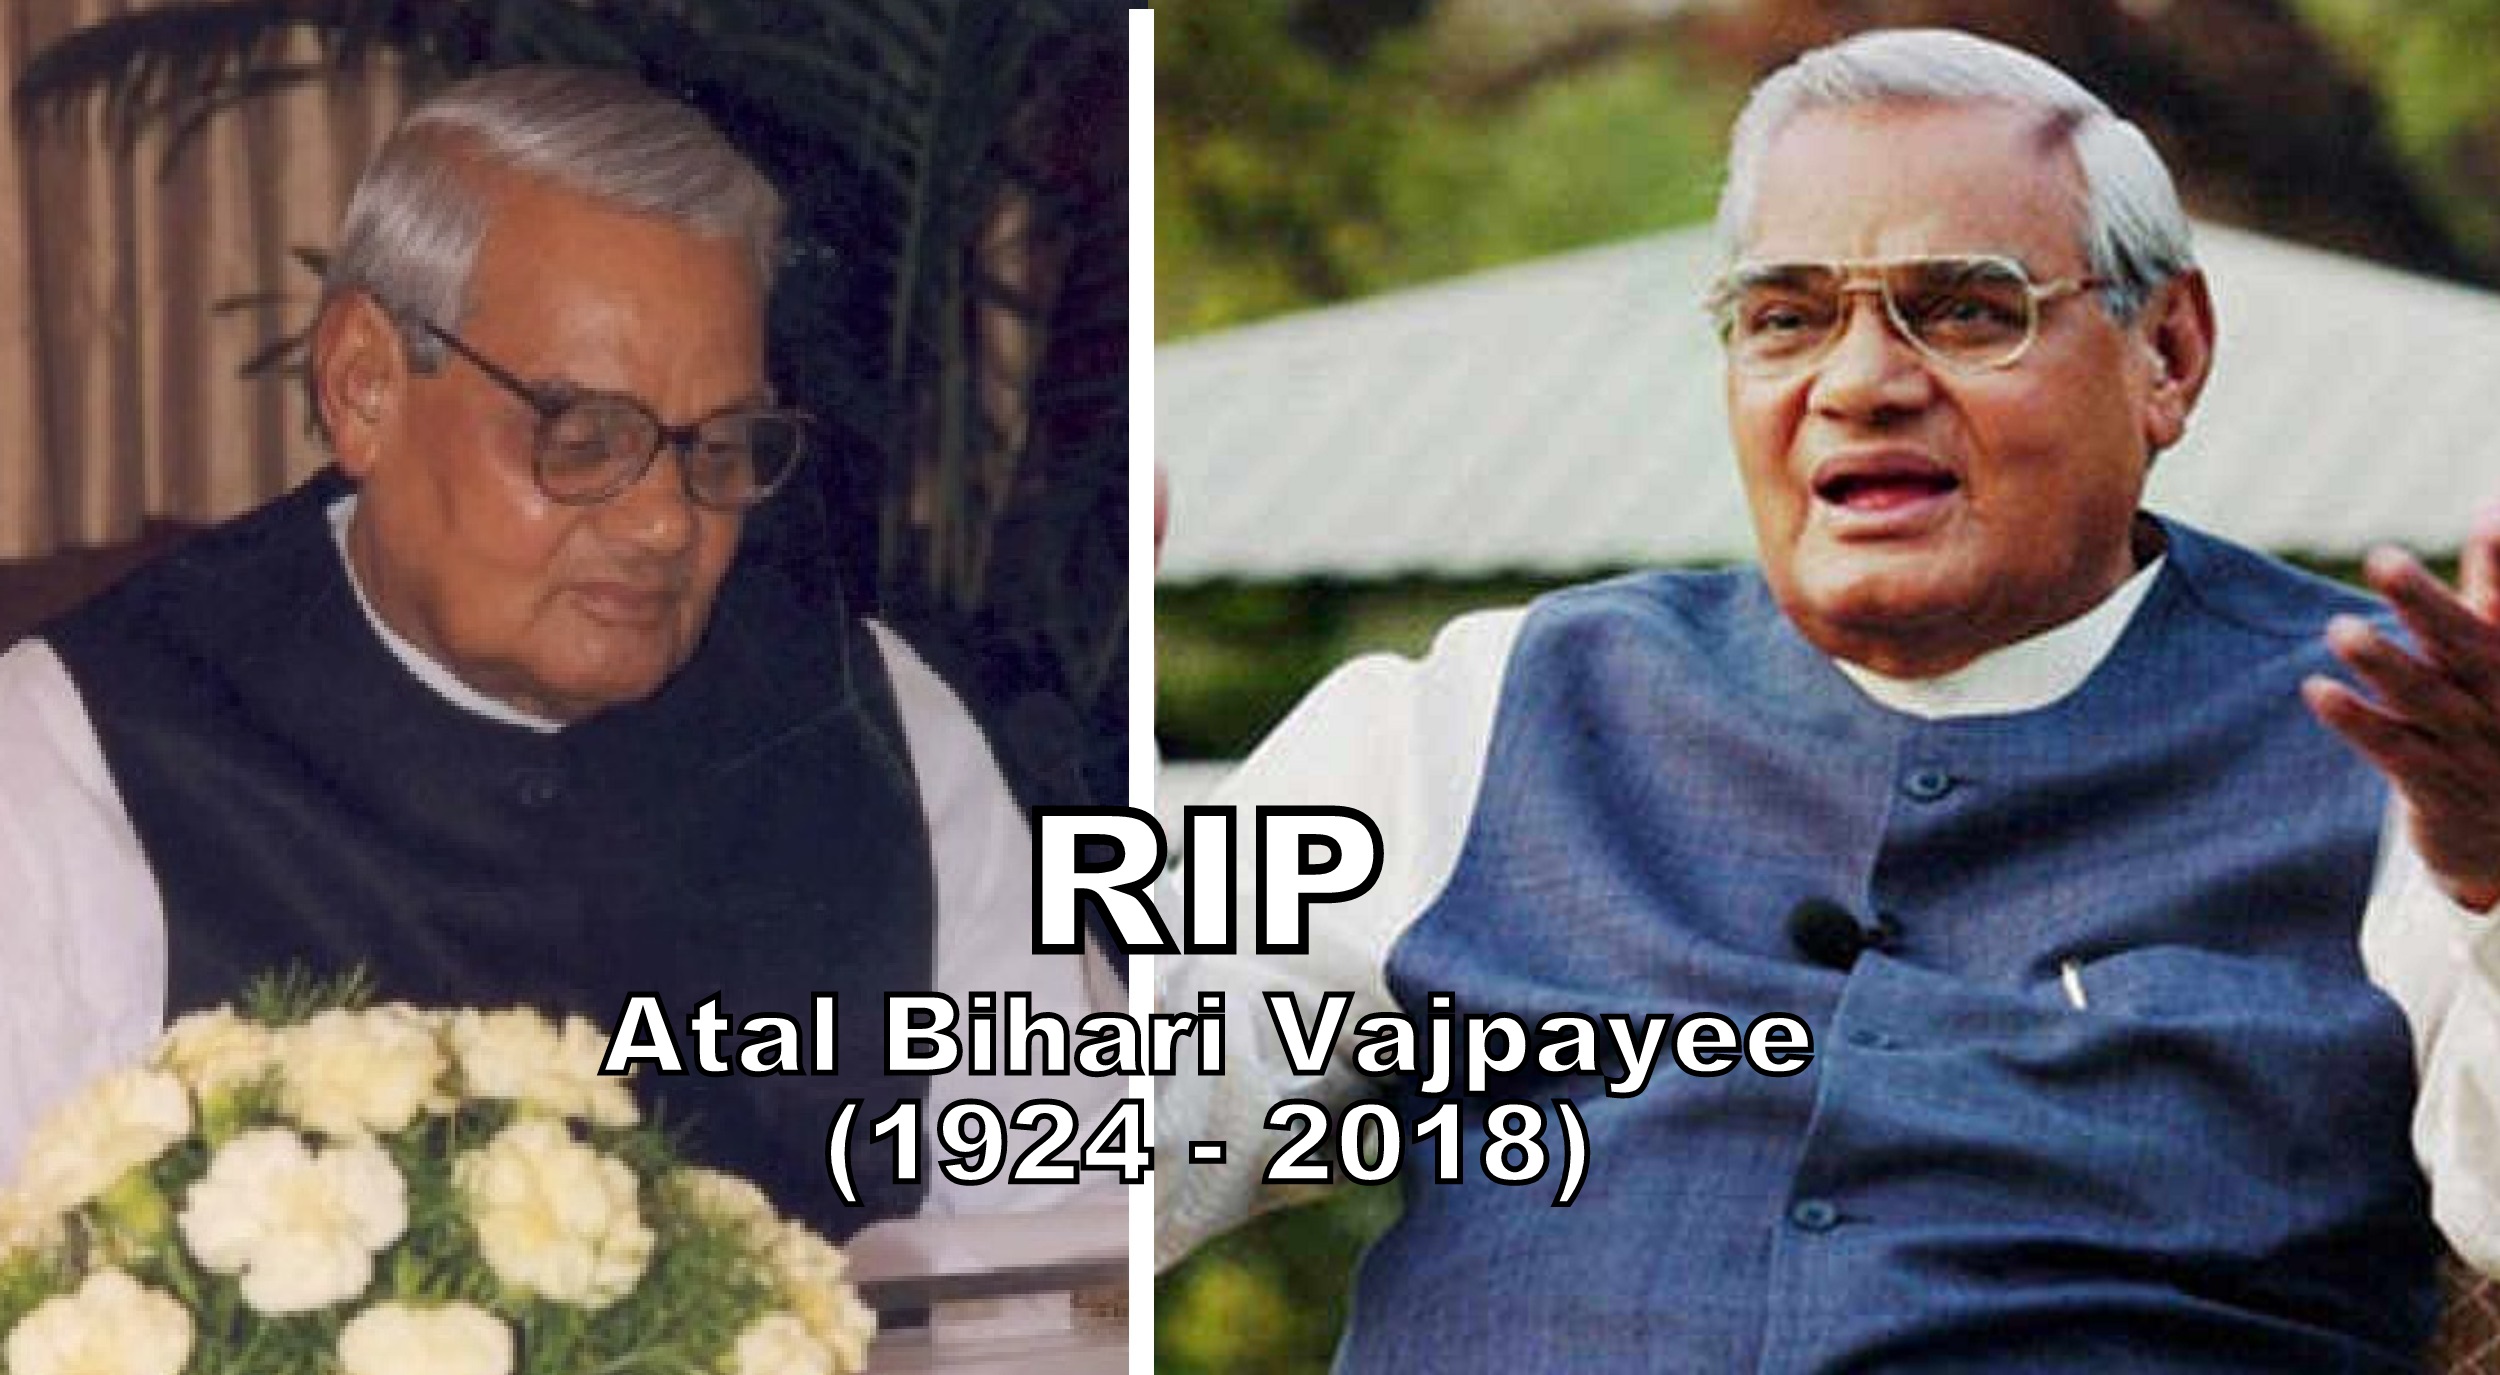 Atal Bihari Vajpayee has passed away at age 93